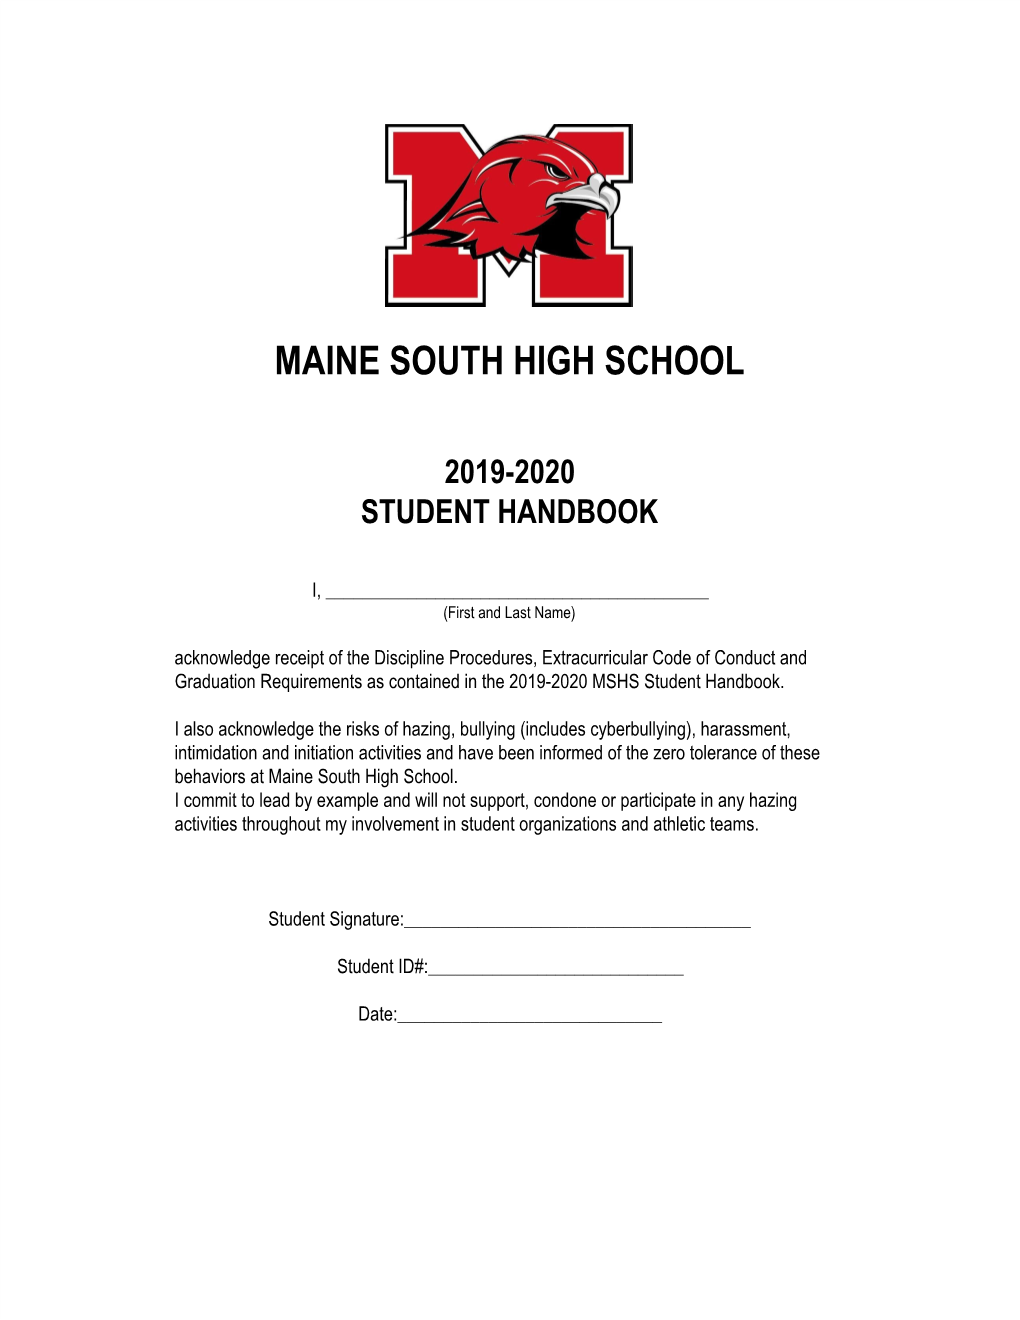 Maine South High School